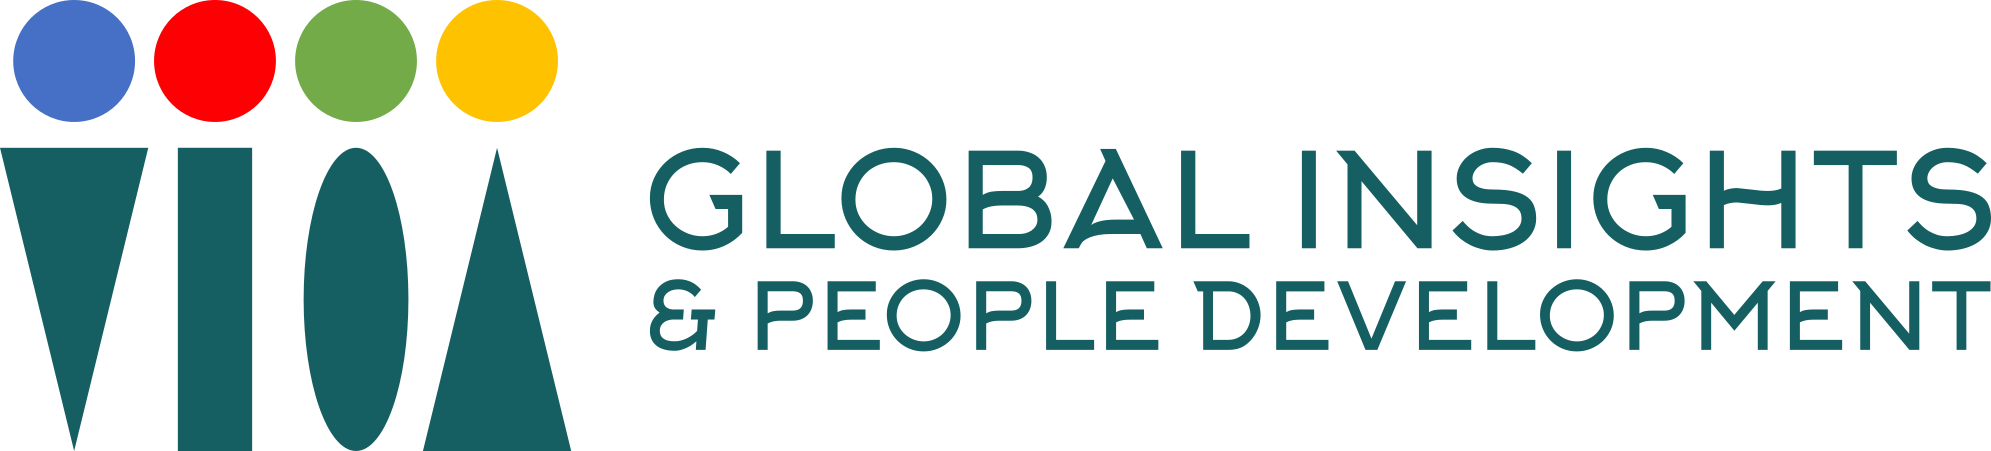 Global Insights & People Development